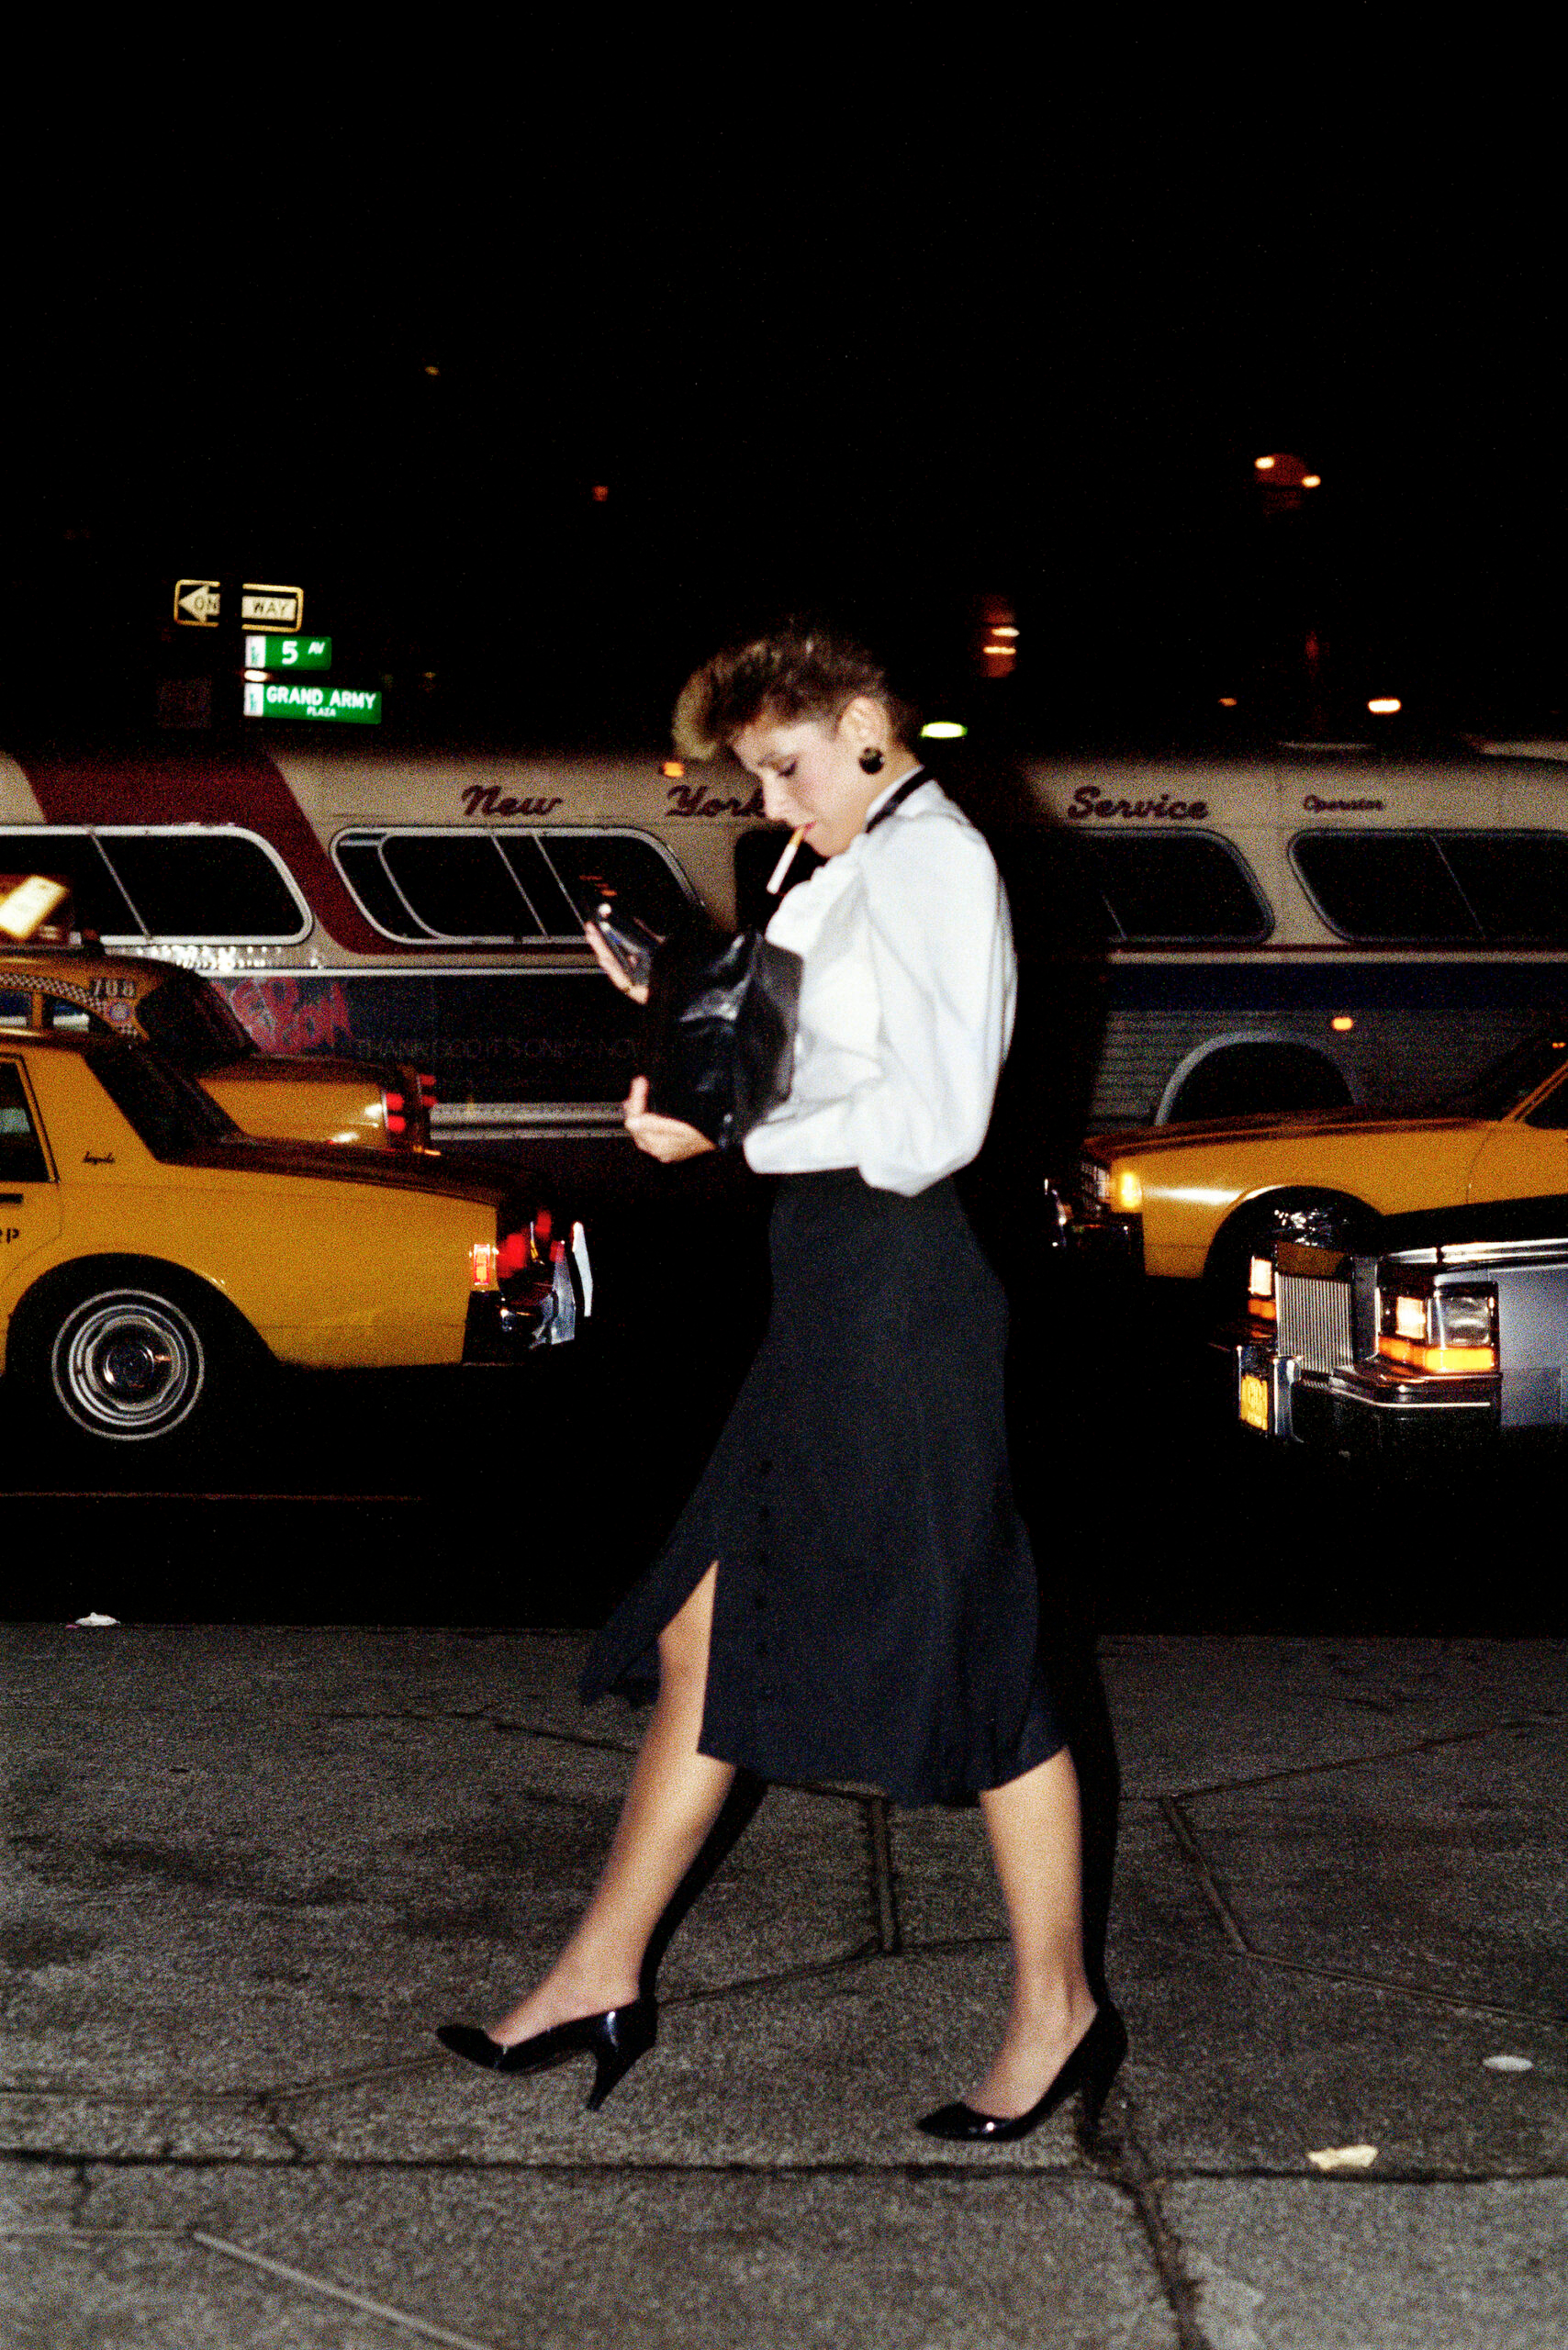     Gun Roze, #41-Fifth Avenue, 1982

